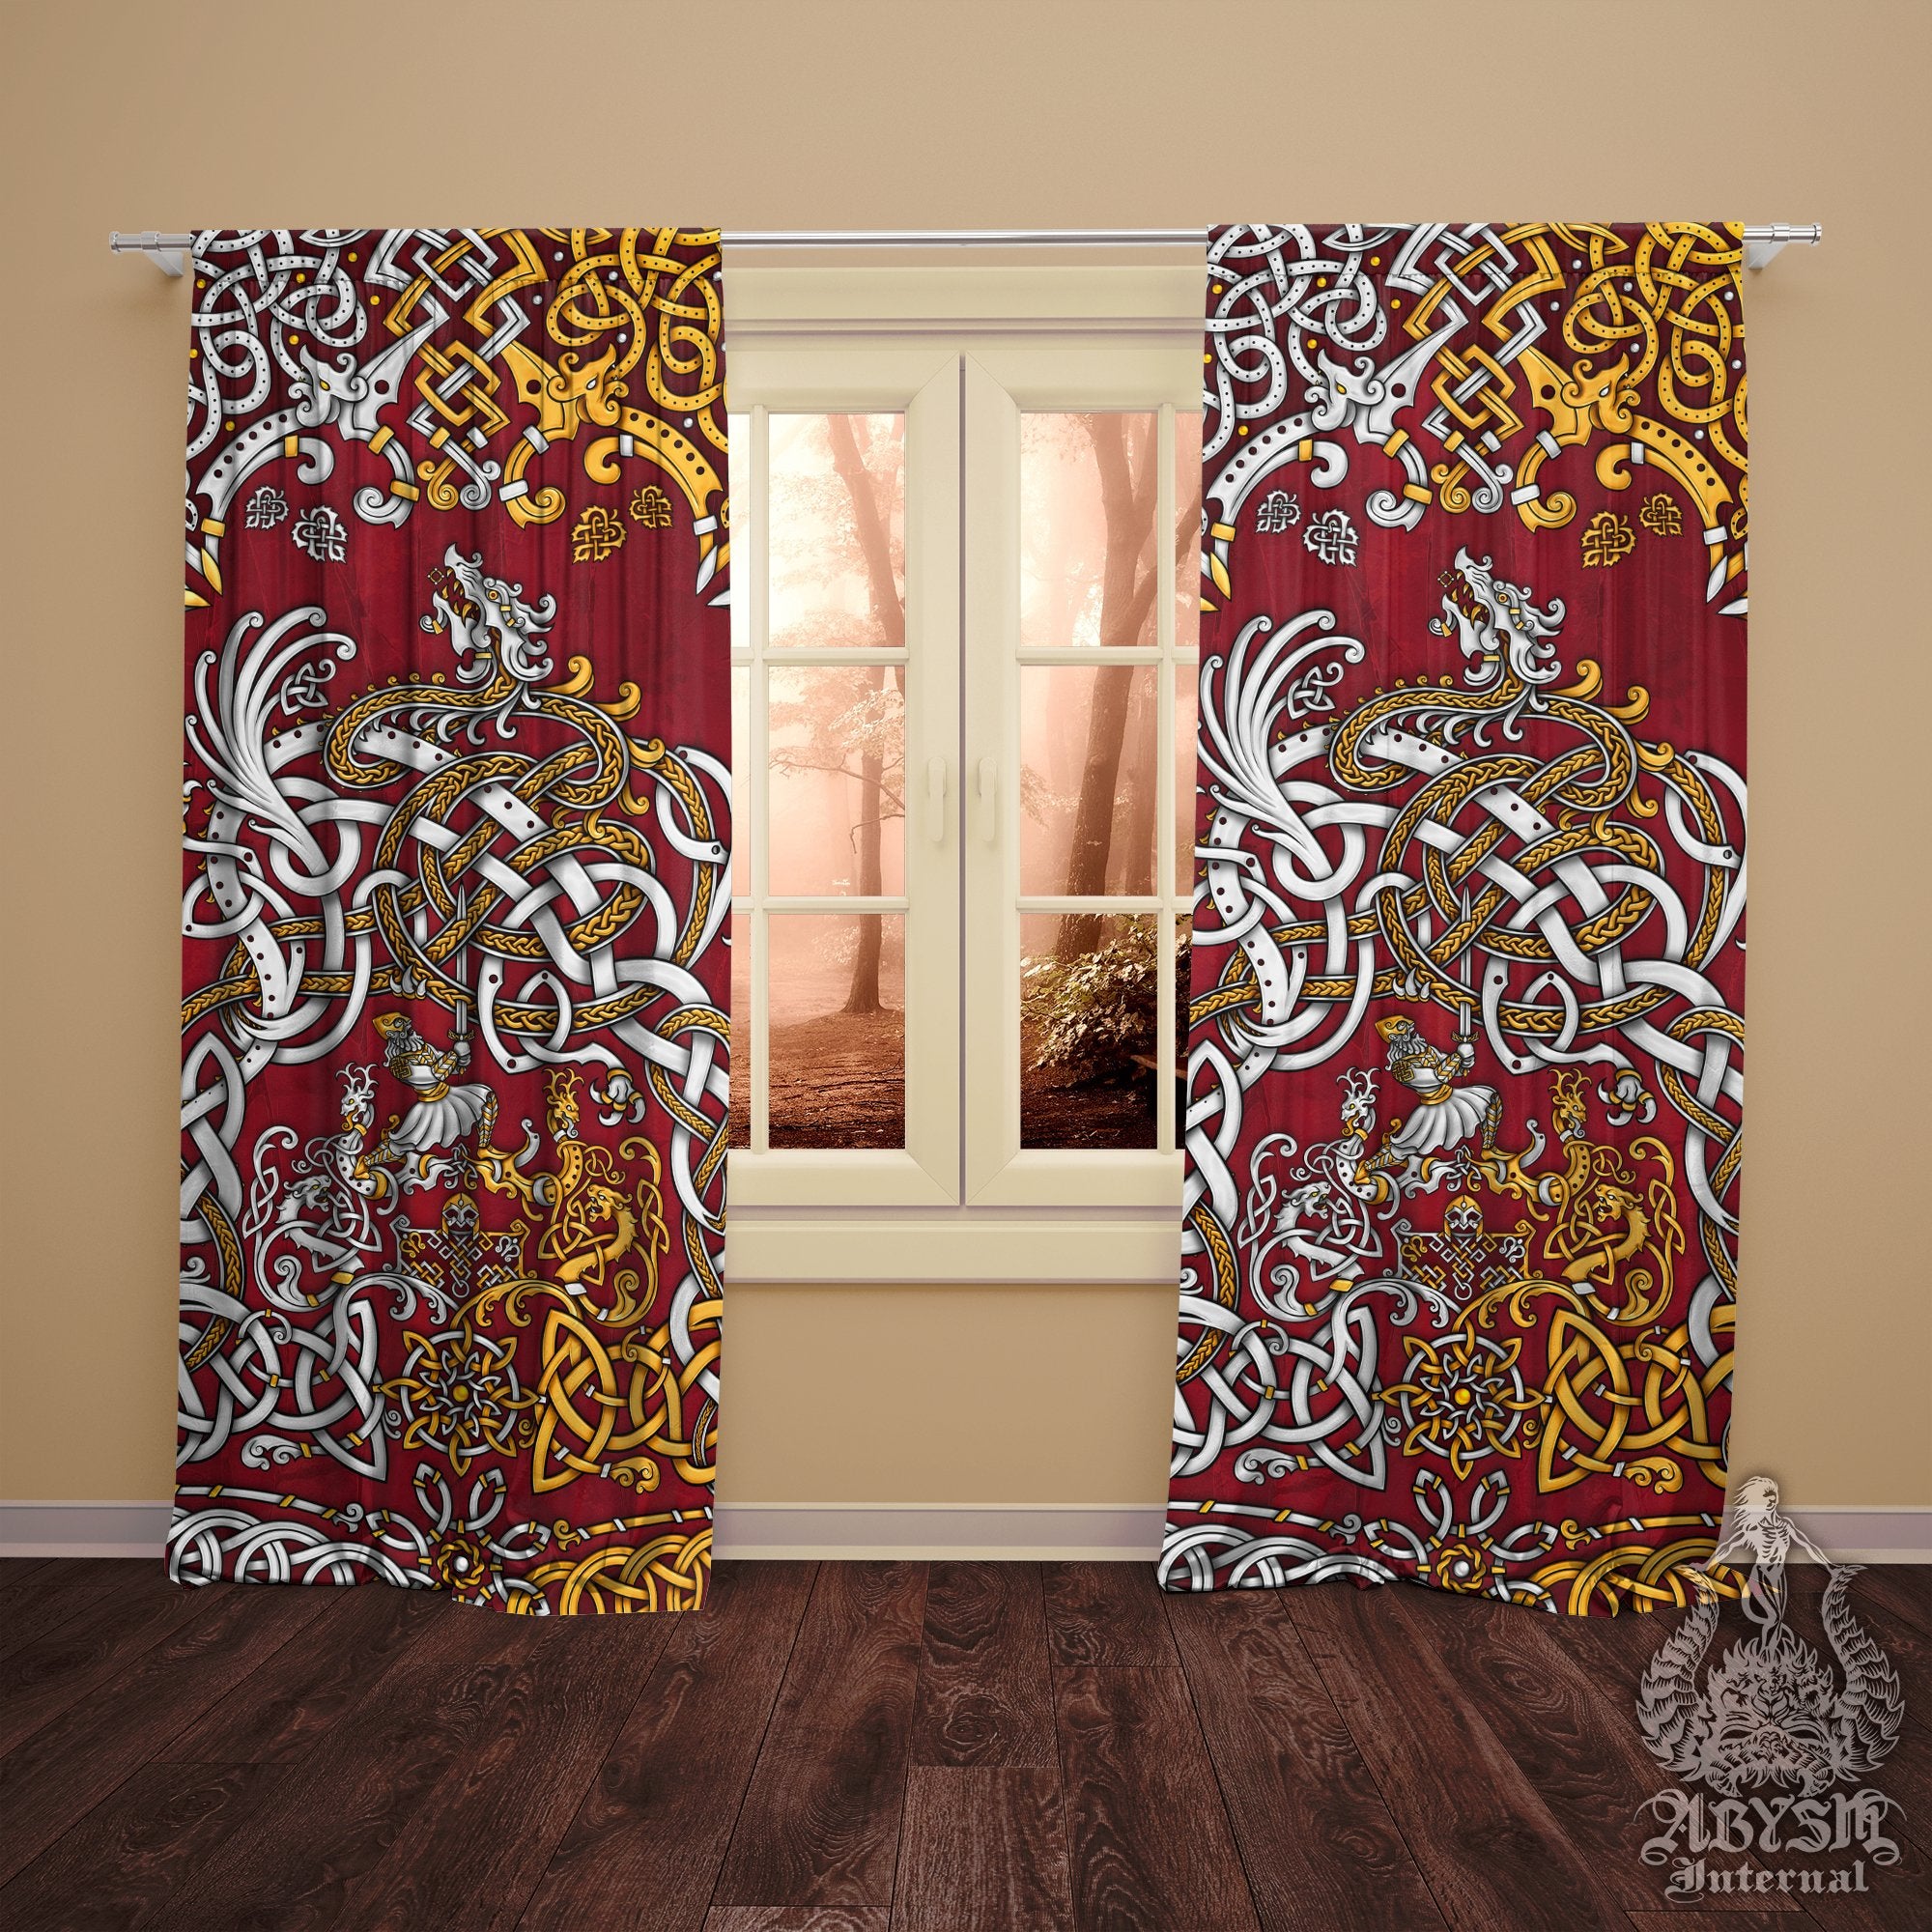 Viking Curtains, 50x84' Printed Window Panels, Norse Room Decor, Nordic Art Print, Sigurd kills Dragon Fafnir - Gold and 3 Colors - Abysm Internal